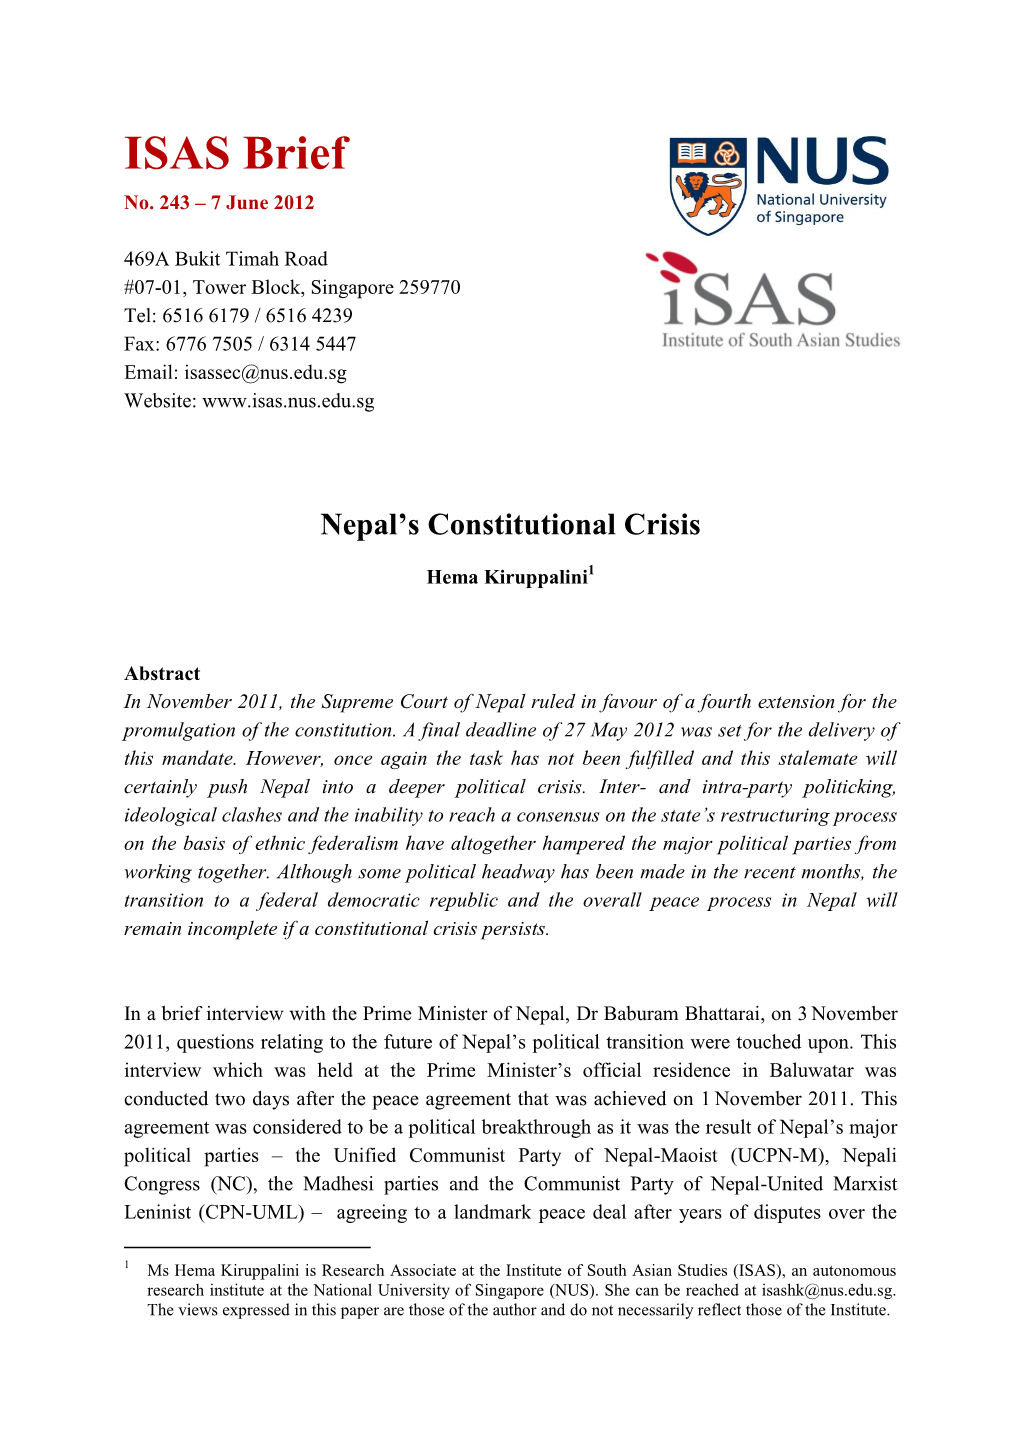 Nepal's Constitutional Crisis